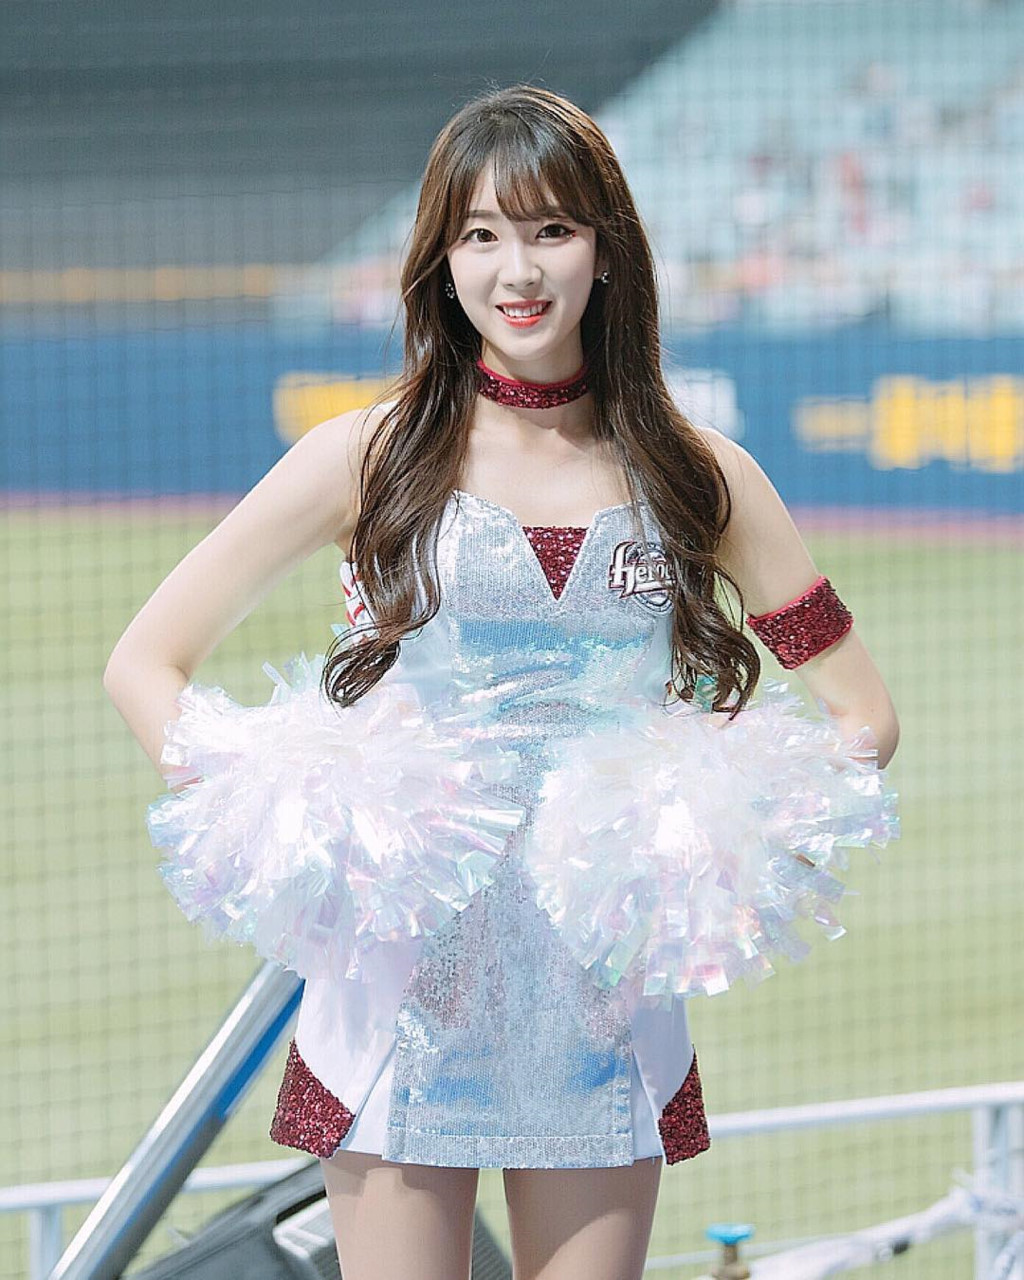 Co gai xinh dep duoc menh danh 'Seolhyun cua gioi cheerleader' hinh anh 3